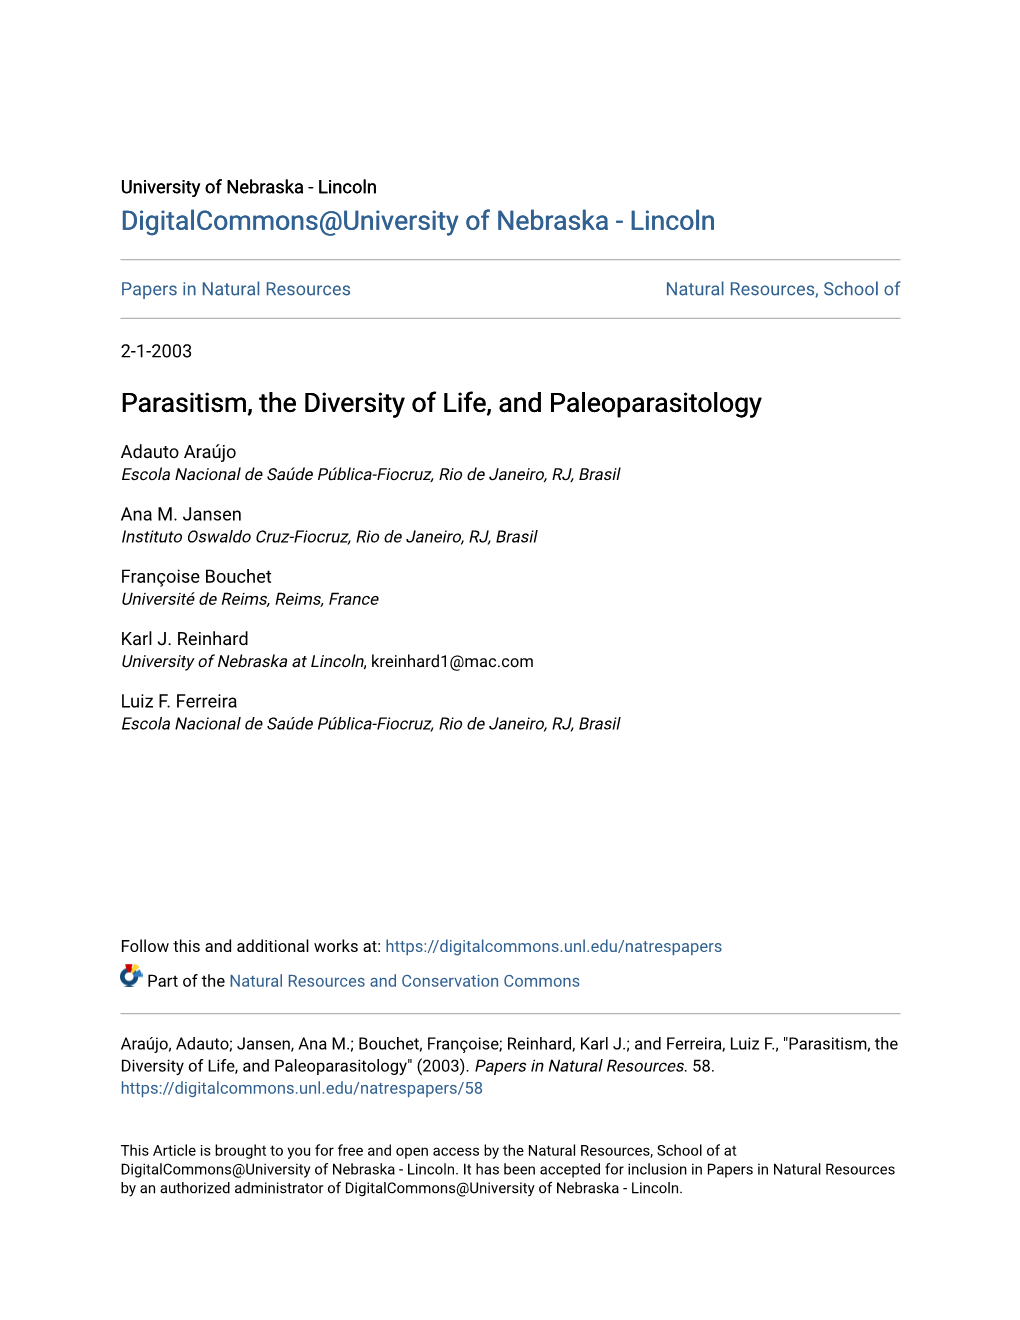 Parasitism, the Diversity of Life, and Paleoparasitology